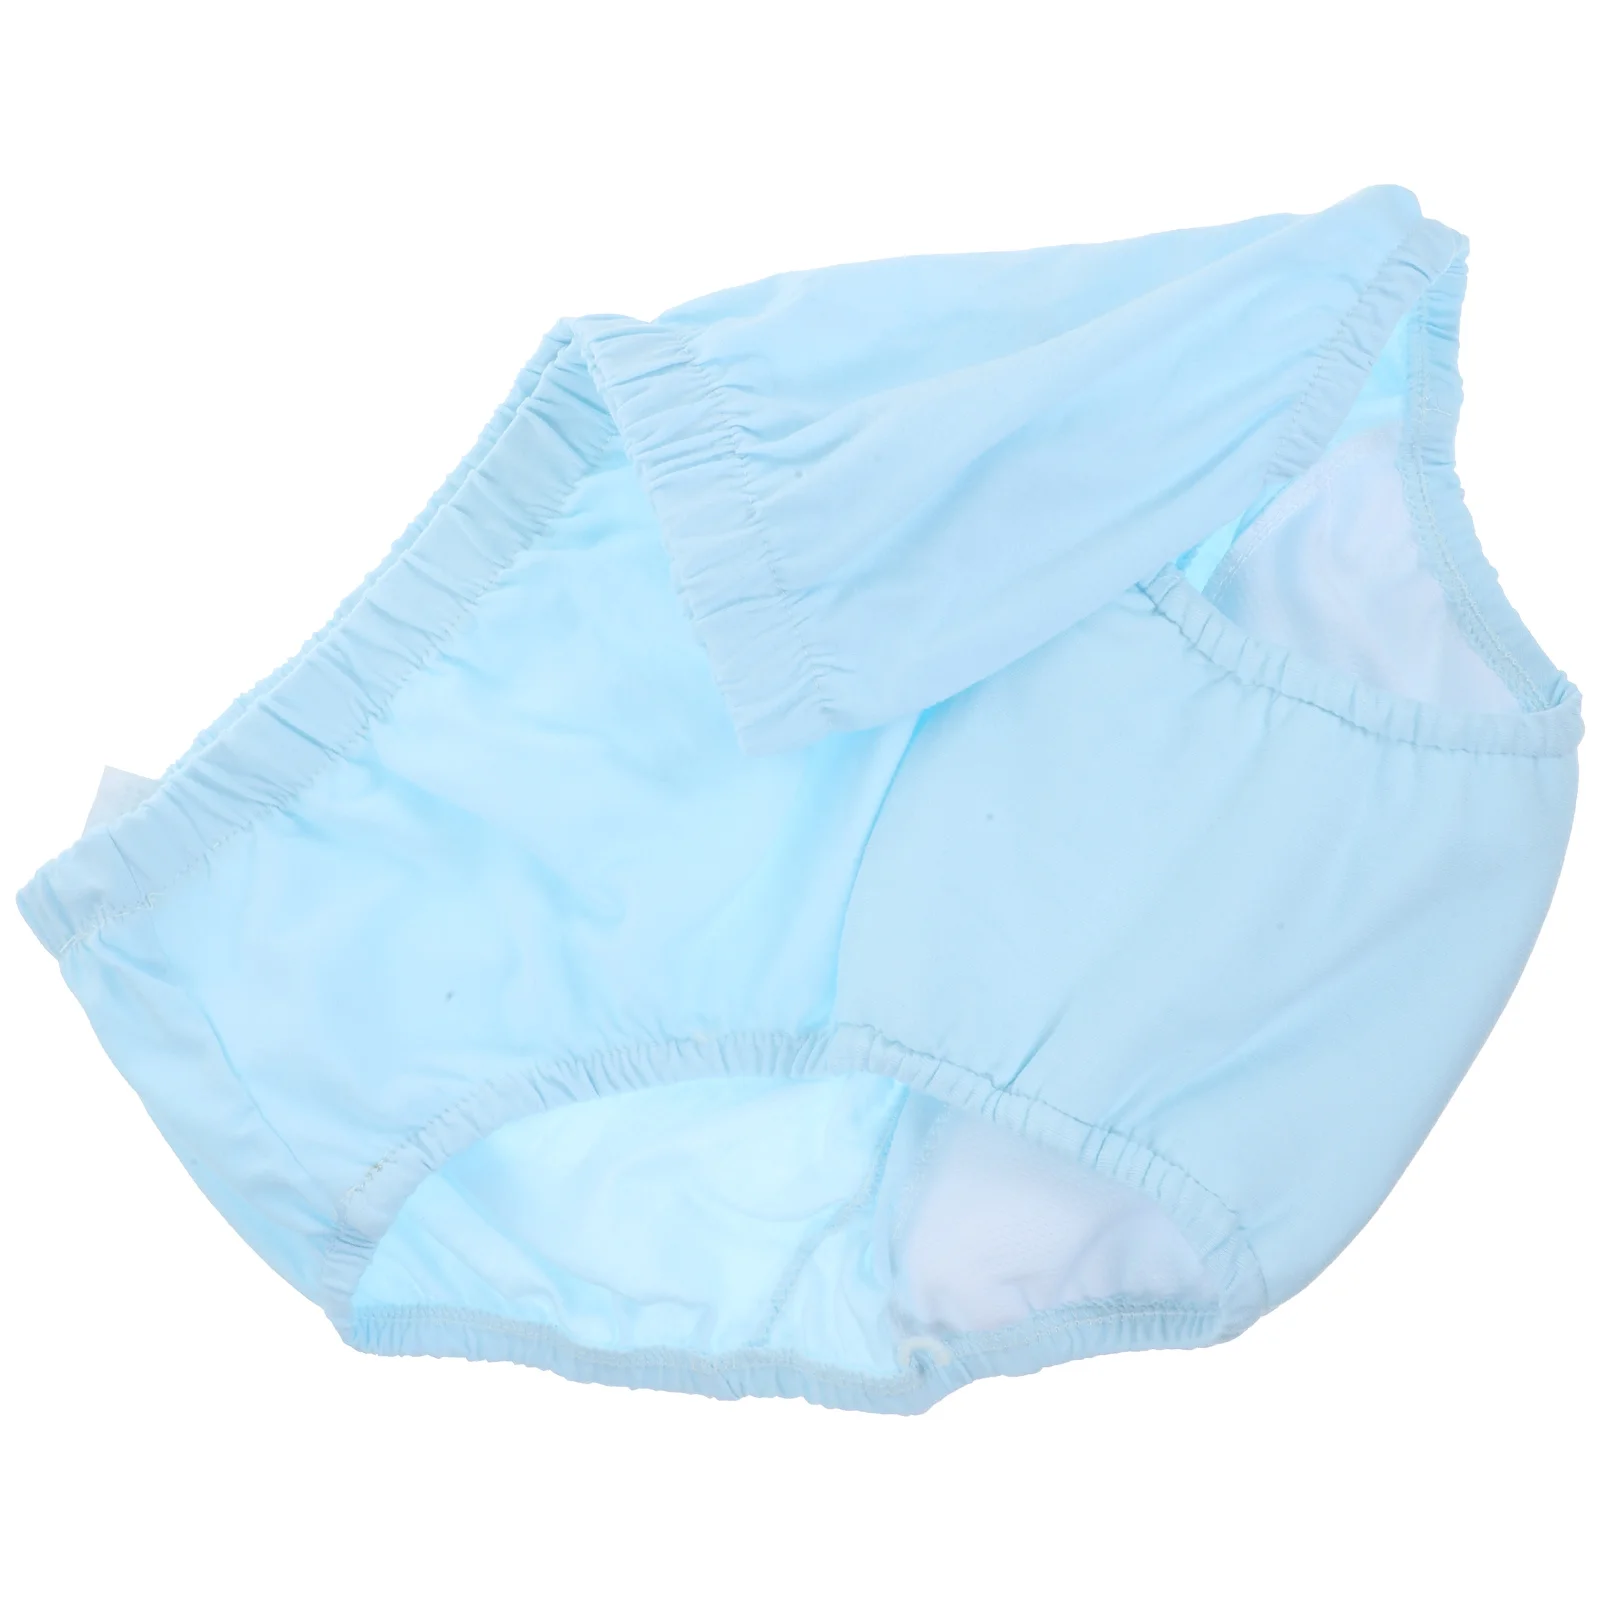 

Adult Diaper Pants Elder Diaper Reusable Washable Elderly Incontinence Underwear Cotton Briefs Urinary Underwear Green Or Blue